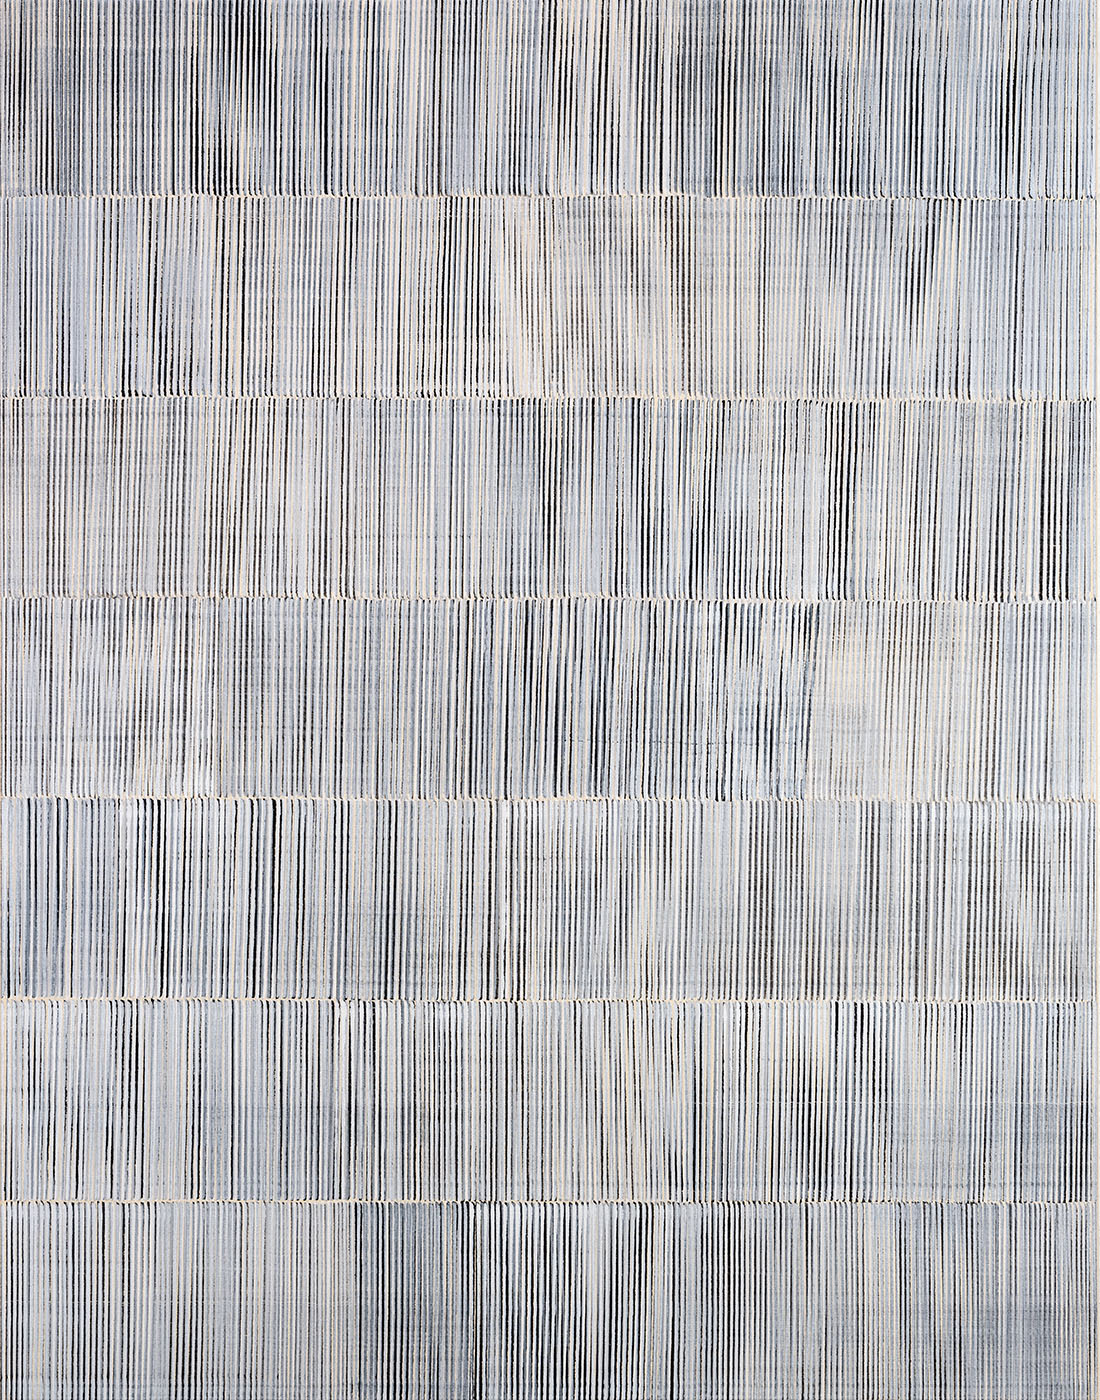 Nikola Dimitrov, Präludium V, 2021, Pigmente, Bindemittel auf Leinwand, 140 × 110 cm